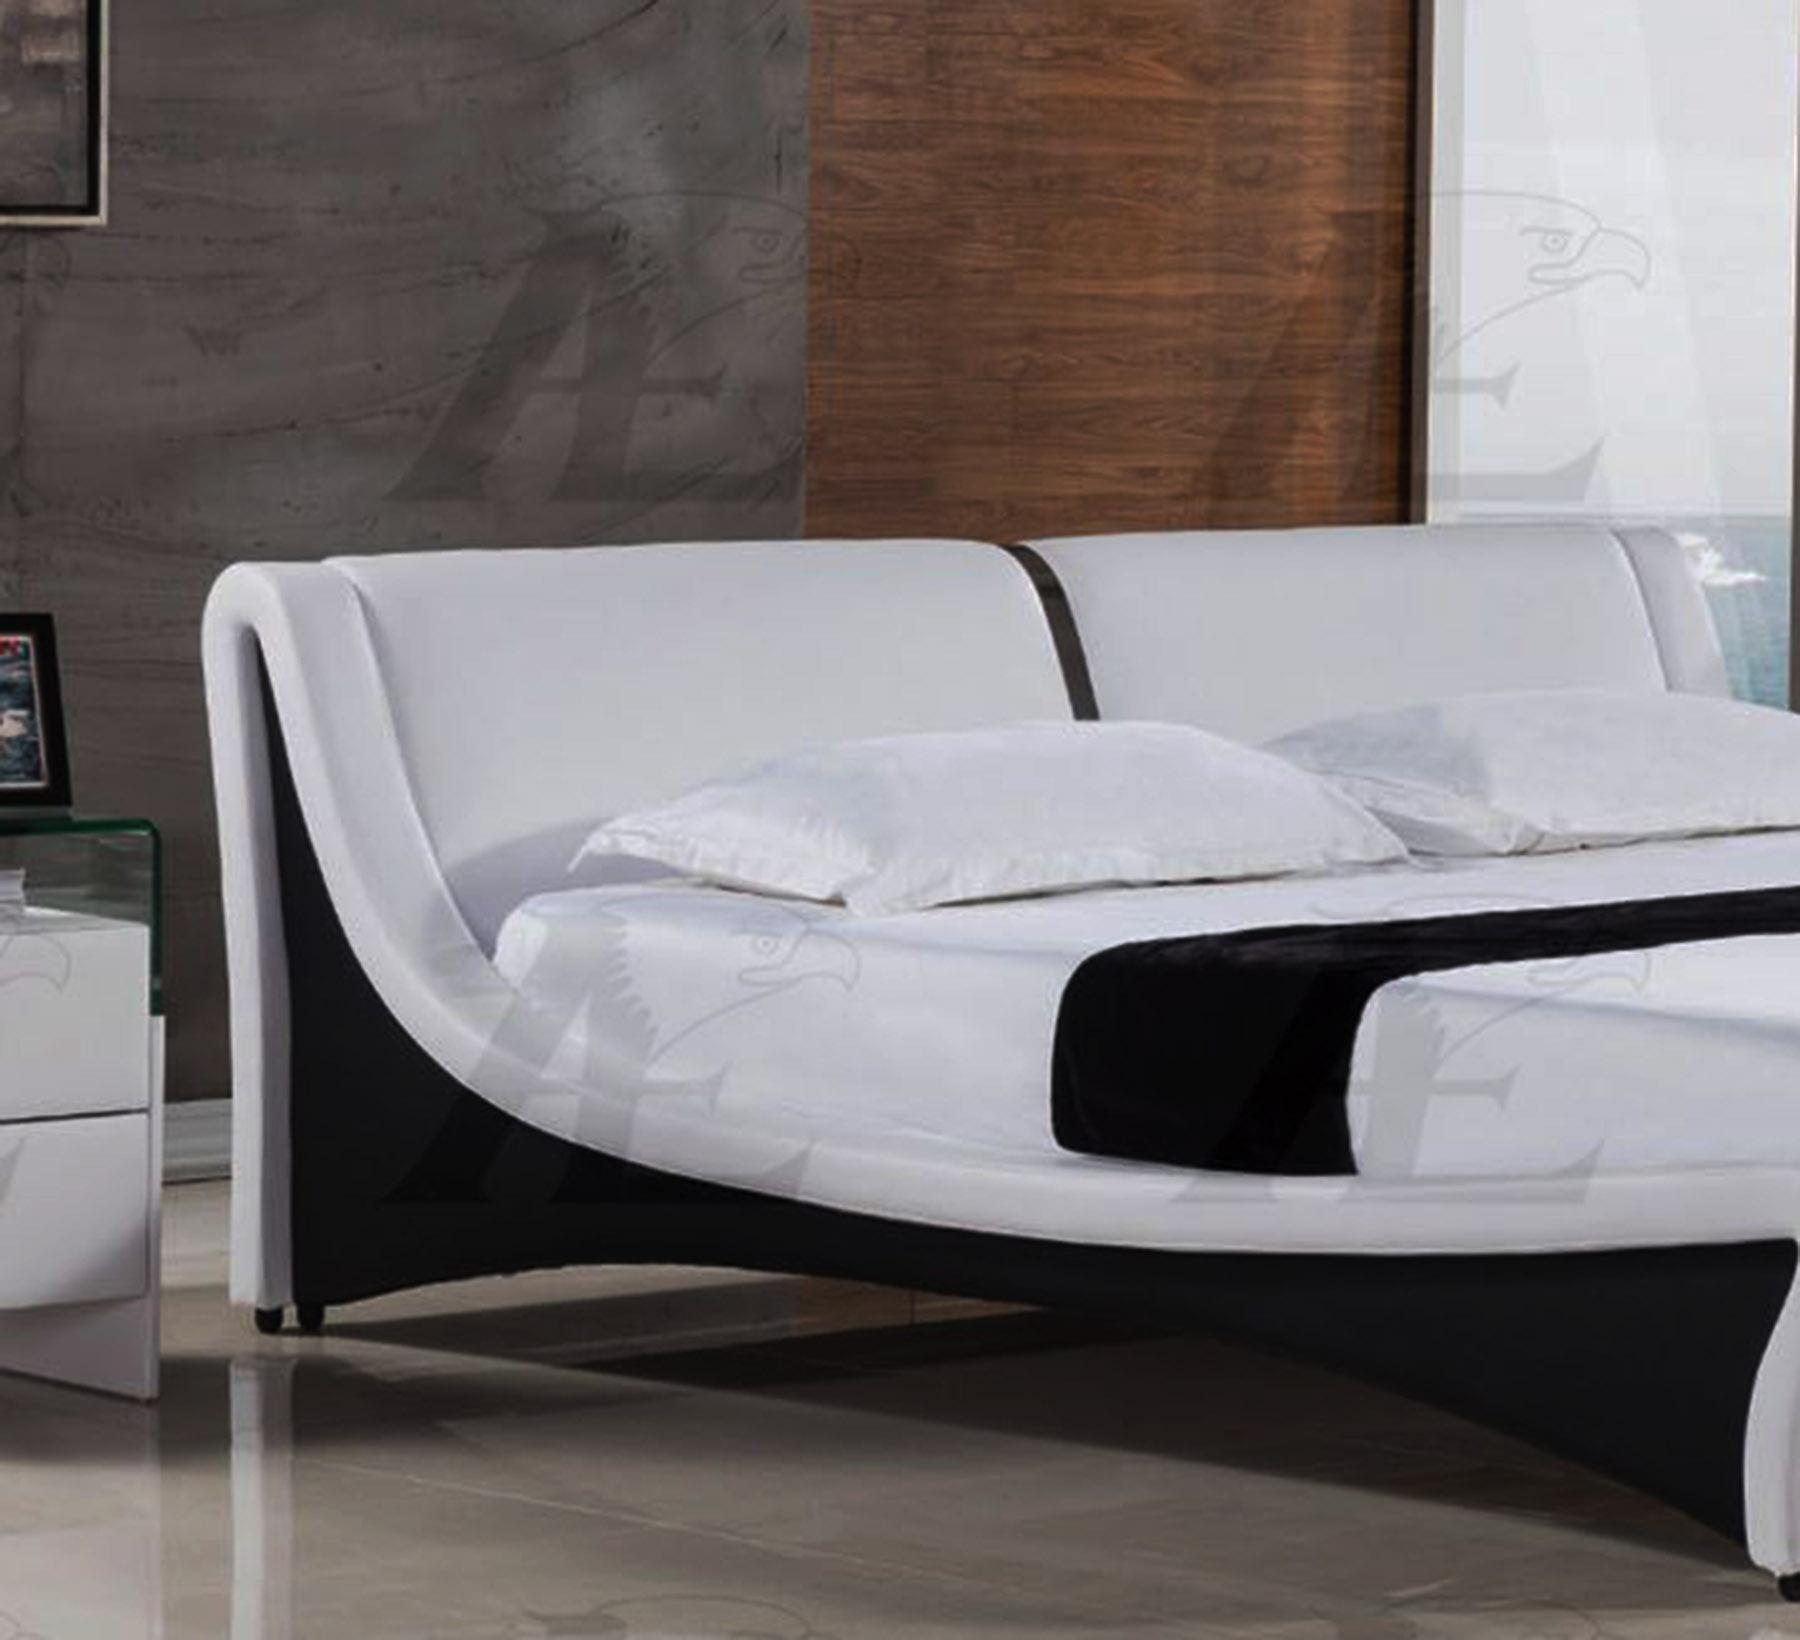 

    
American Eagle Furniture B-D039 Platform Bed White AE B-D039-CK
